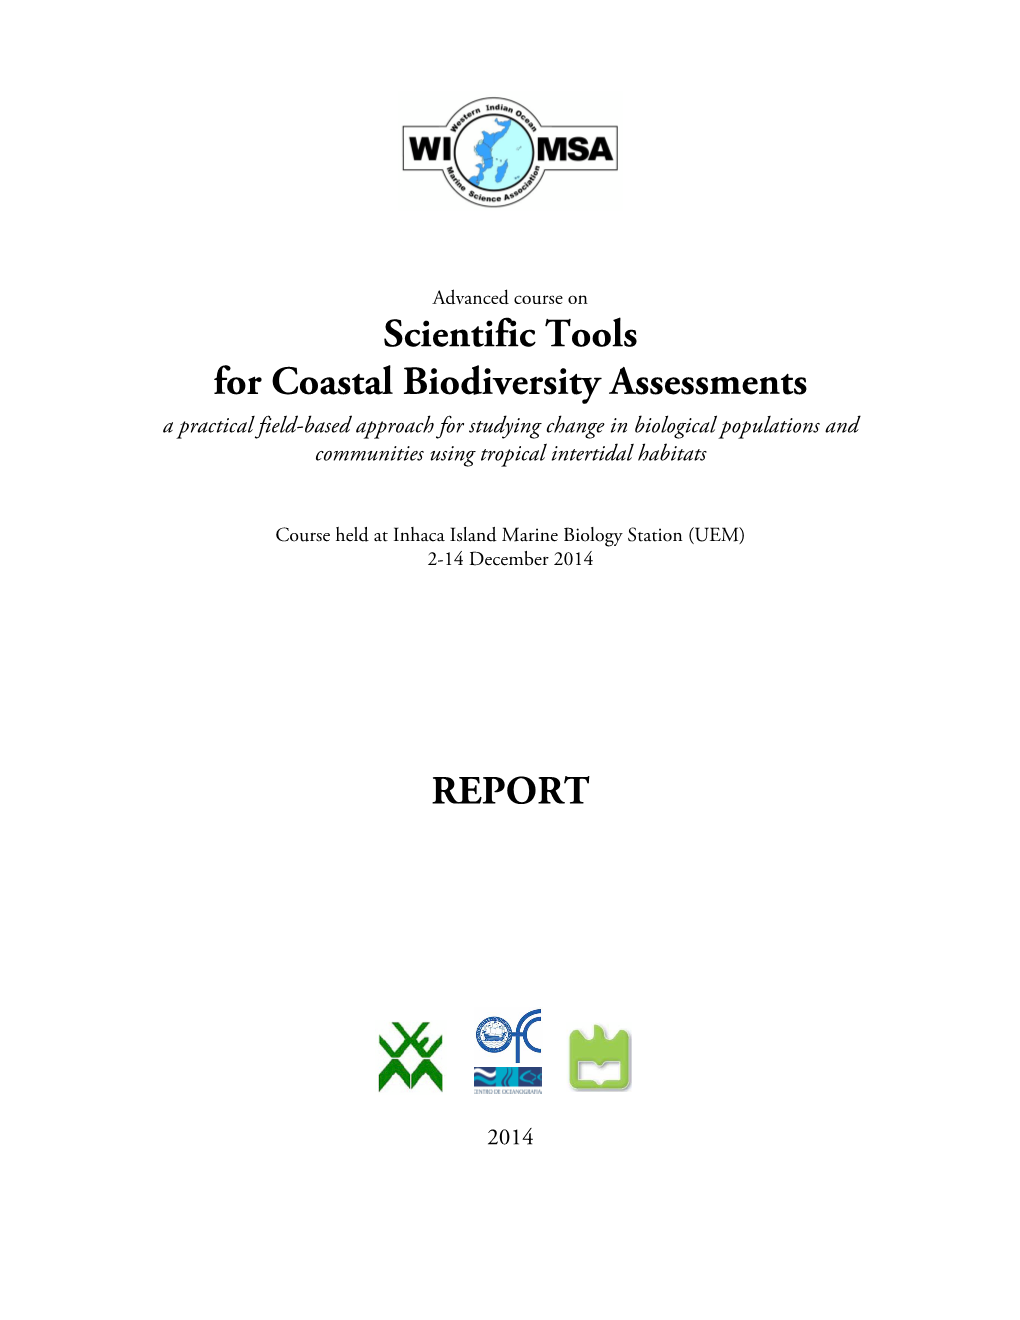 Scientific Tools for Coastal Biodiversity Assessments REPORT